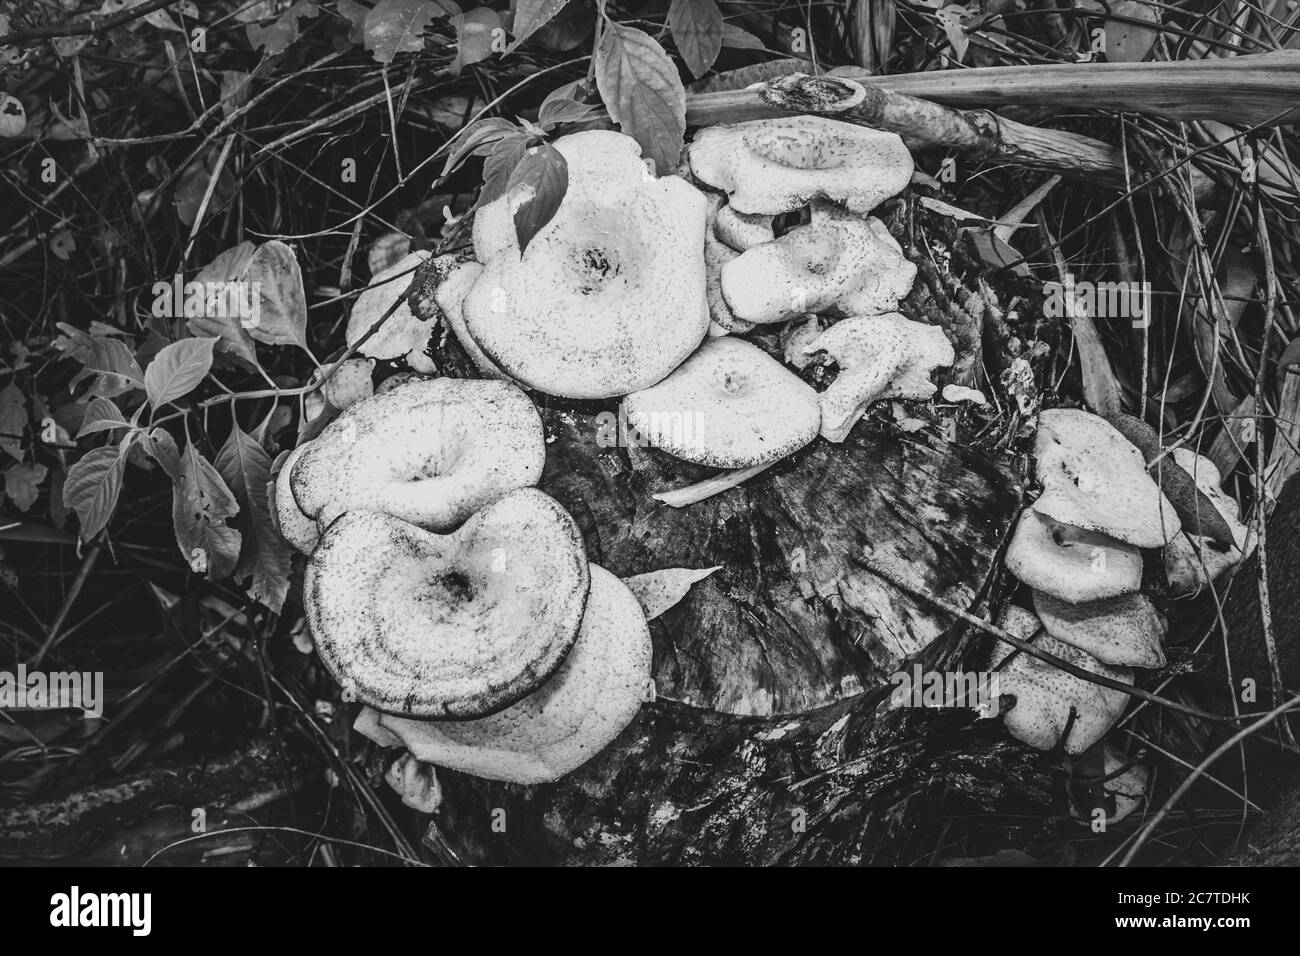 Bracket fungi (Polypores) growing on a dead tree stump, Uganda, Africa Stock Photo